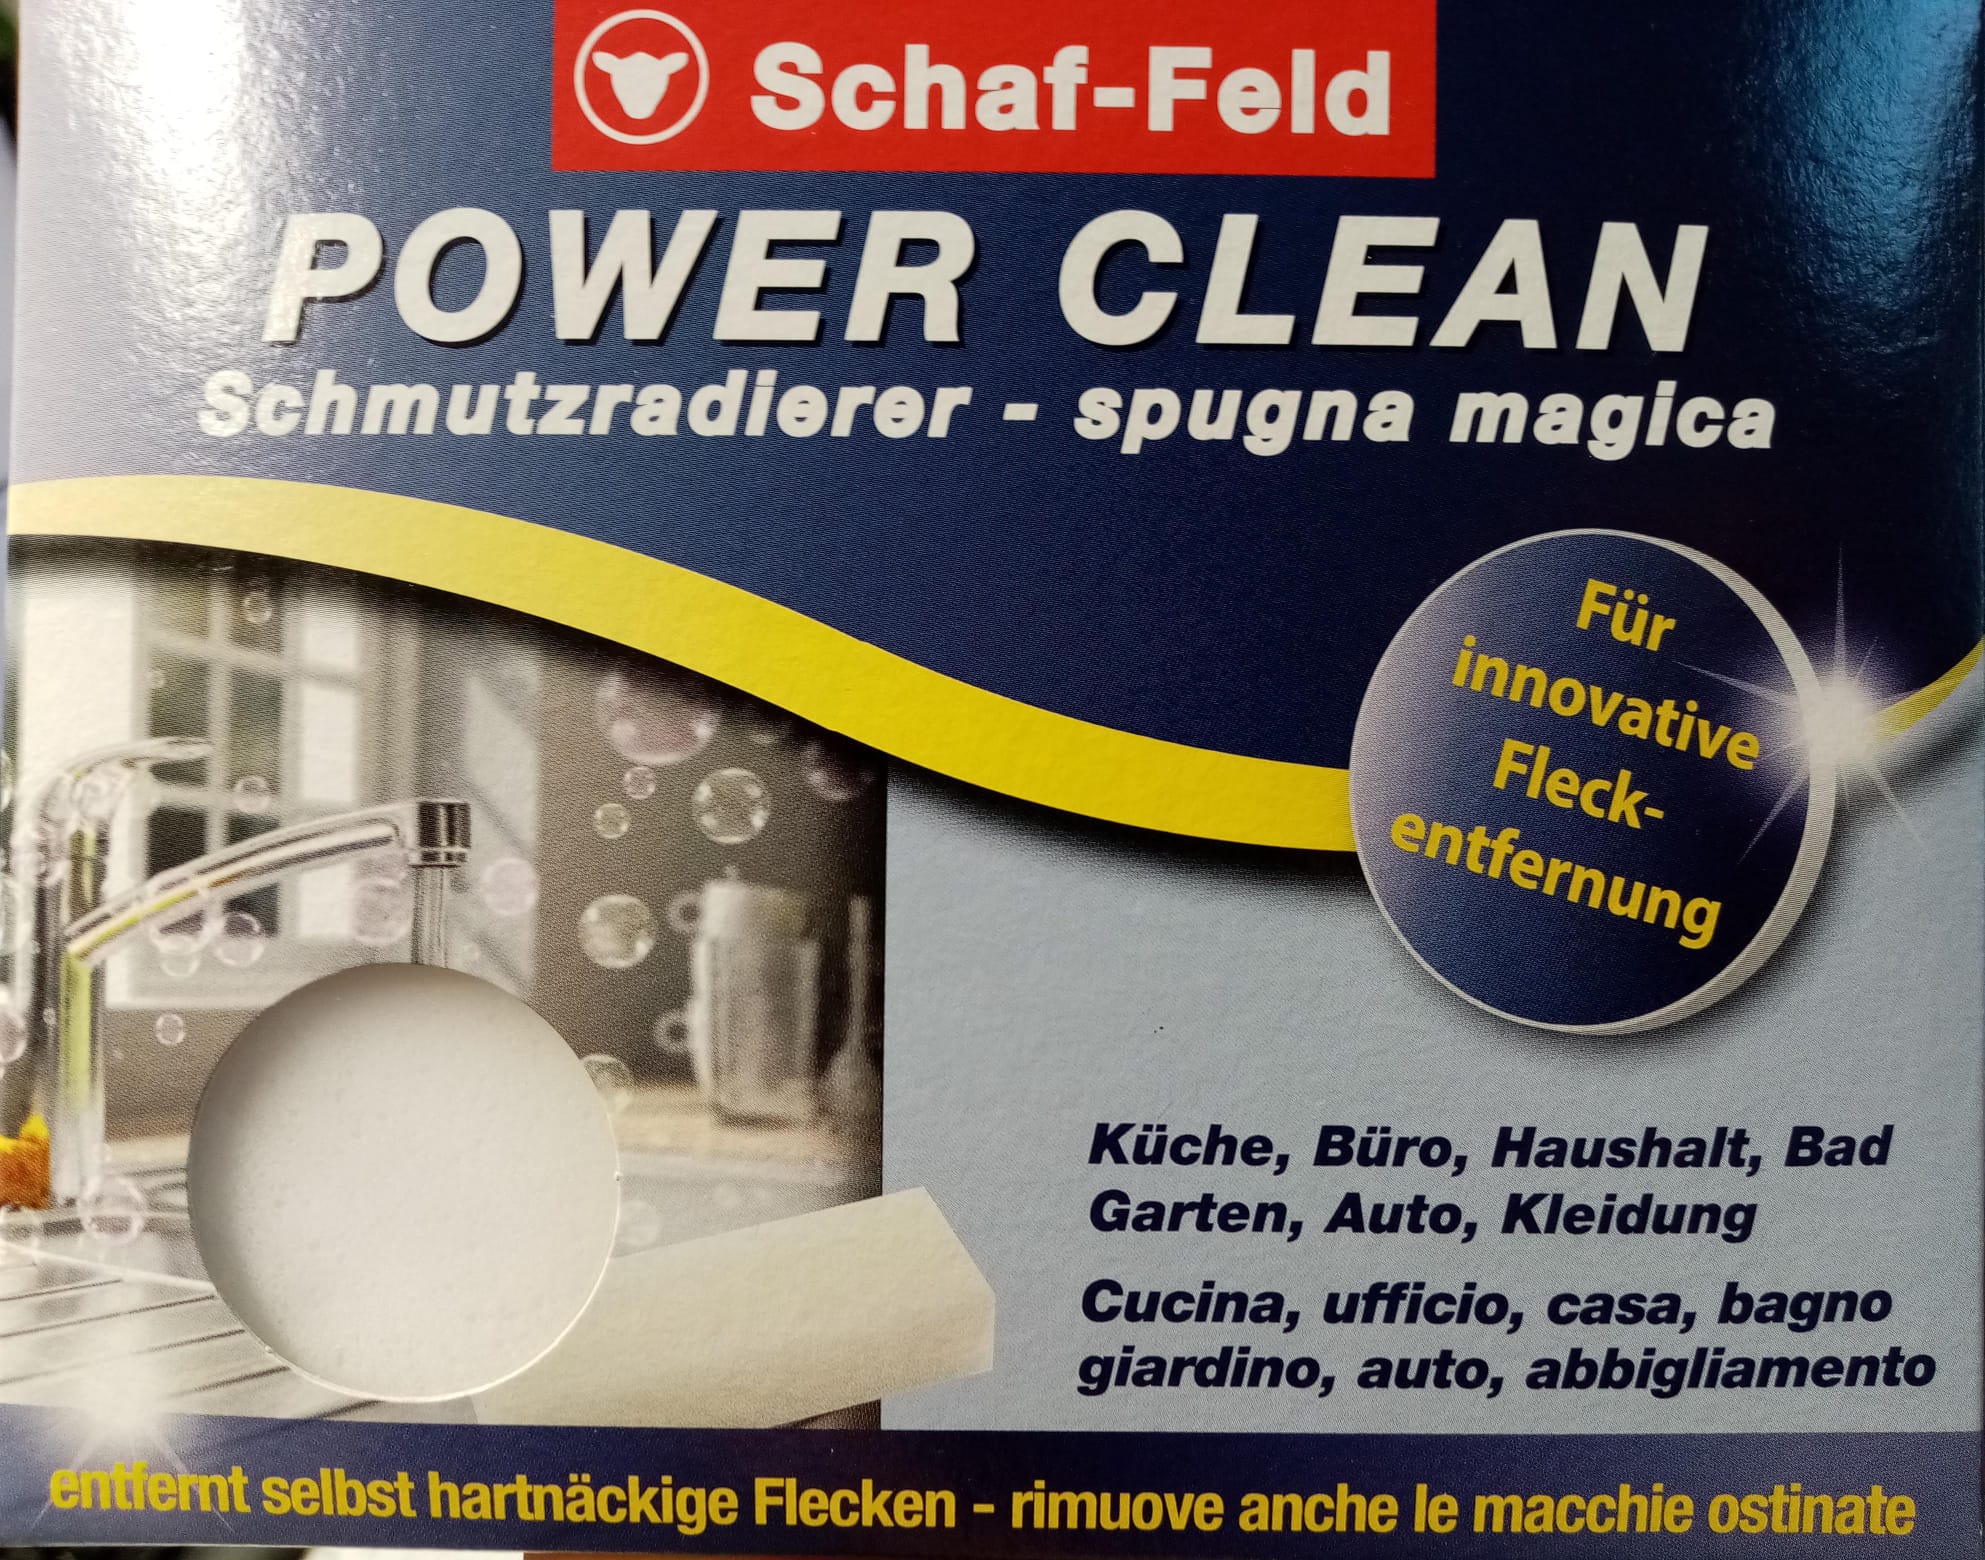 SCHMUTZRADIERER: SCHAF- FELD POWER CLEAN